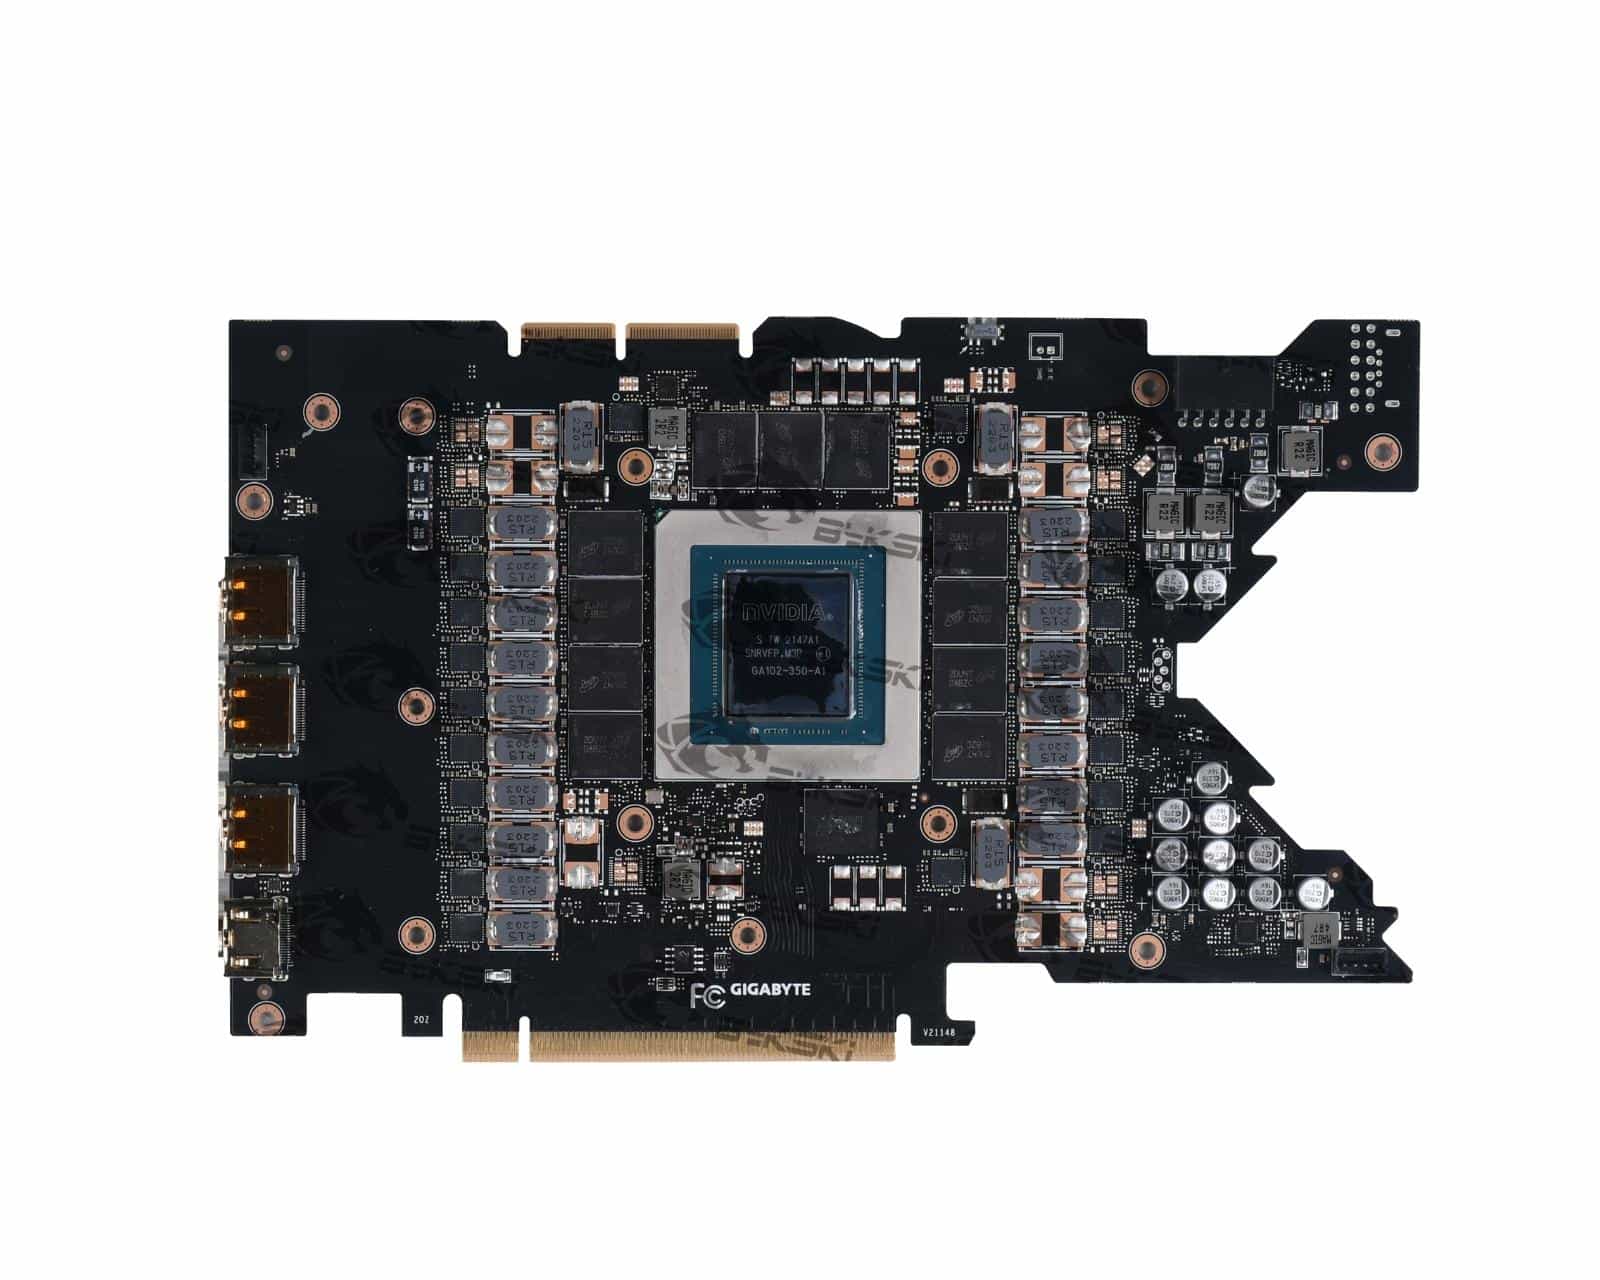 Bykski Full Coverage GPU Water Block and Backplate for Gigabyte RTX 3090Ti Gaming 24G (N-GV3090TIGMOC-X) - PrimoChill - KEEPING IT COOL